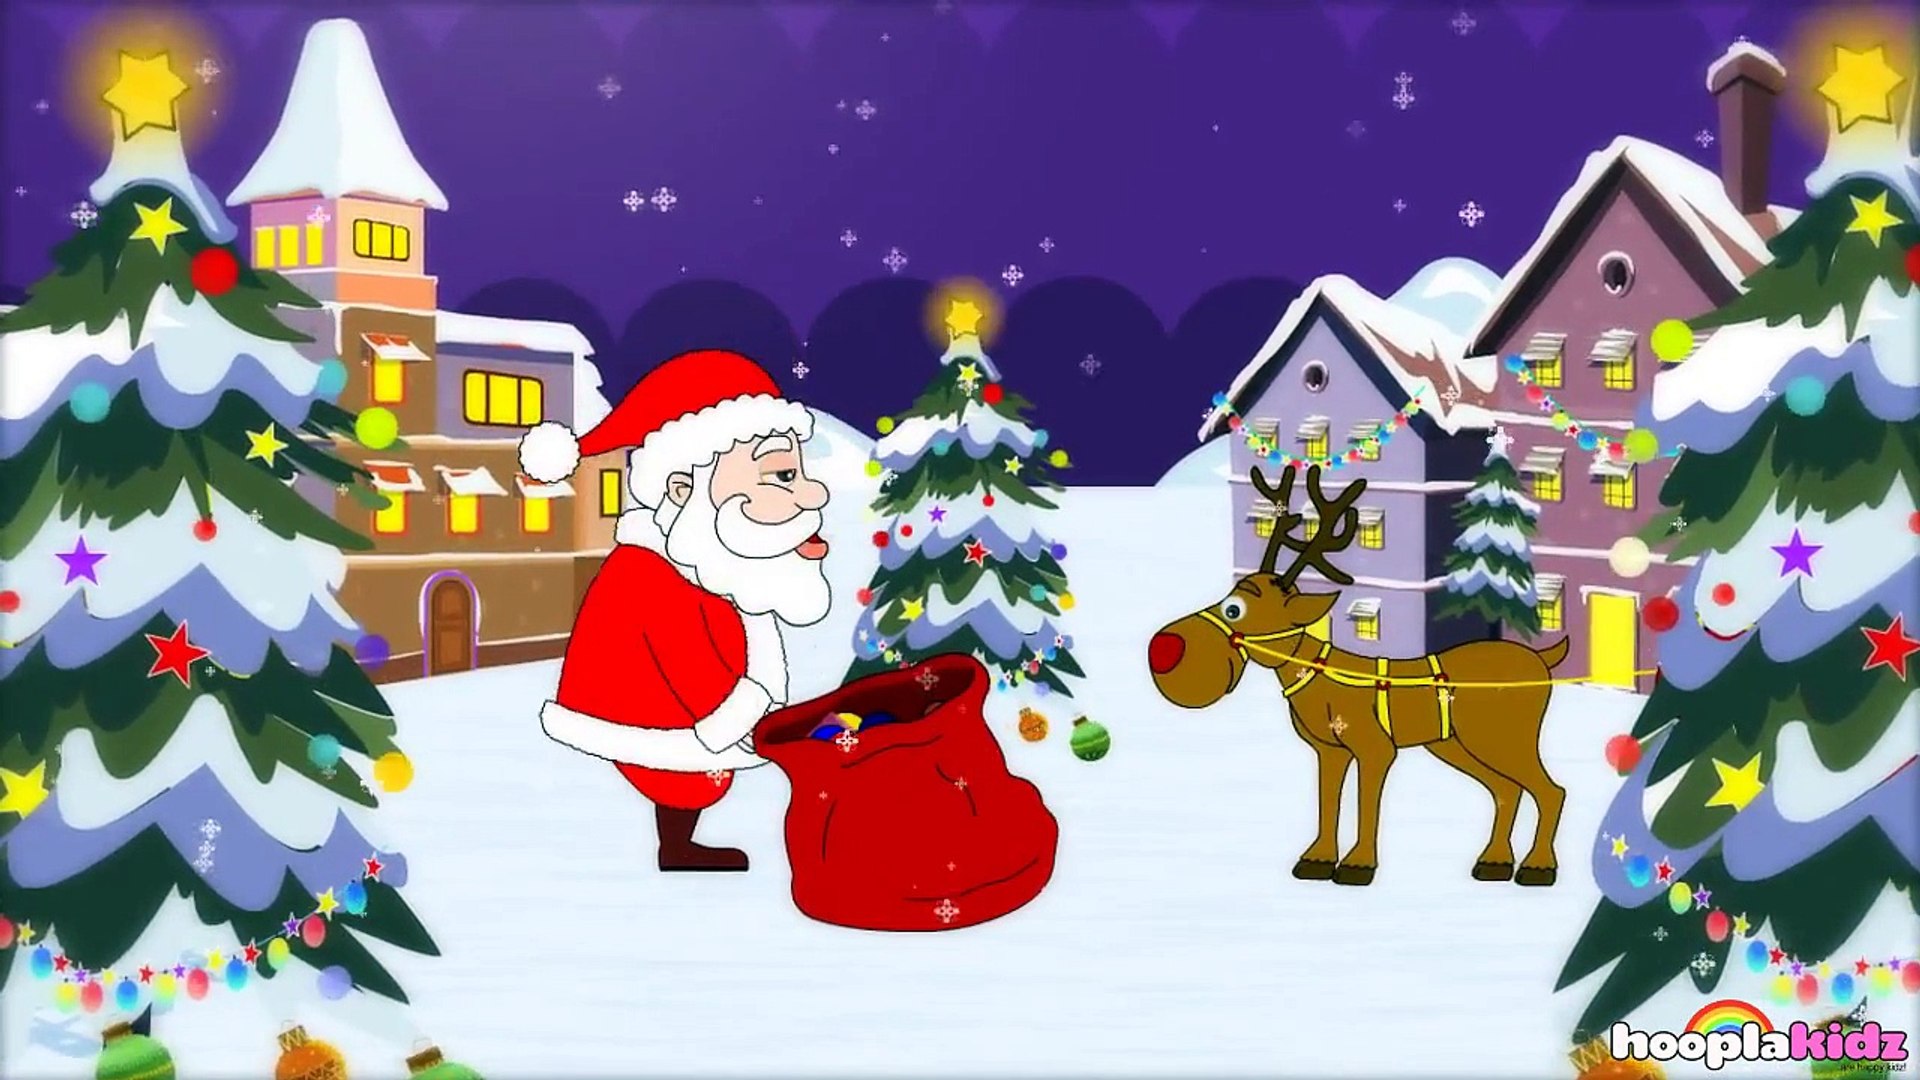 O Christmas Tree | Christmas Carols | Christmas Carols Songs For Children  by Hooplakidz - video Dailymotion